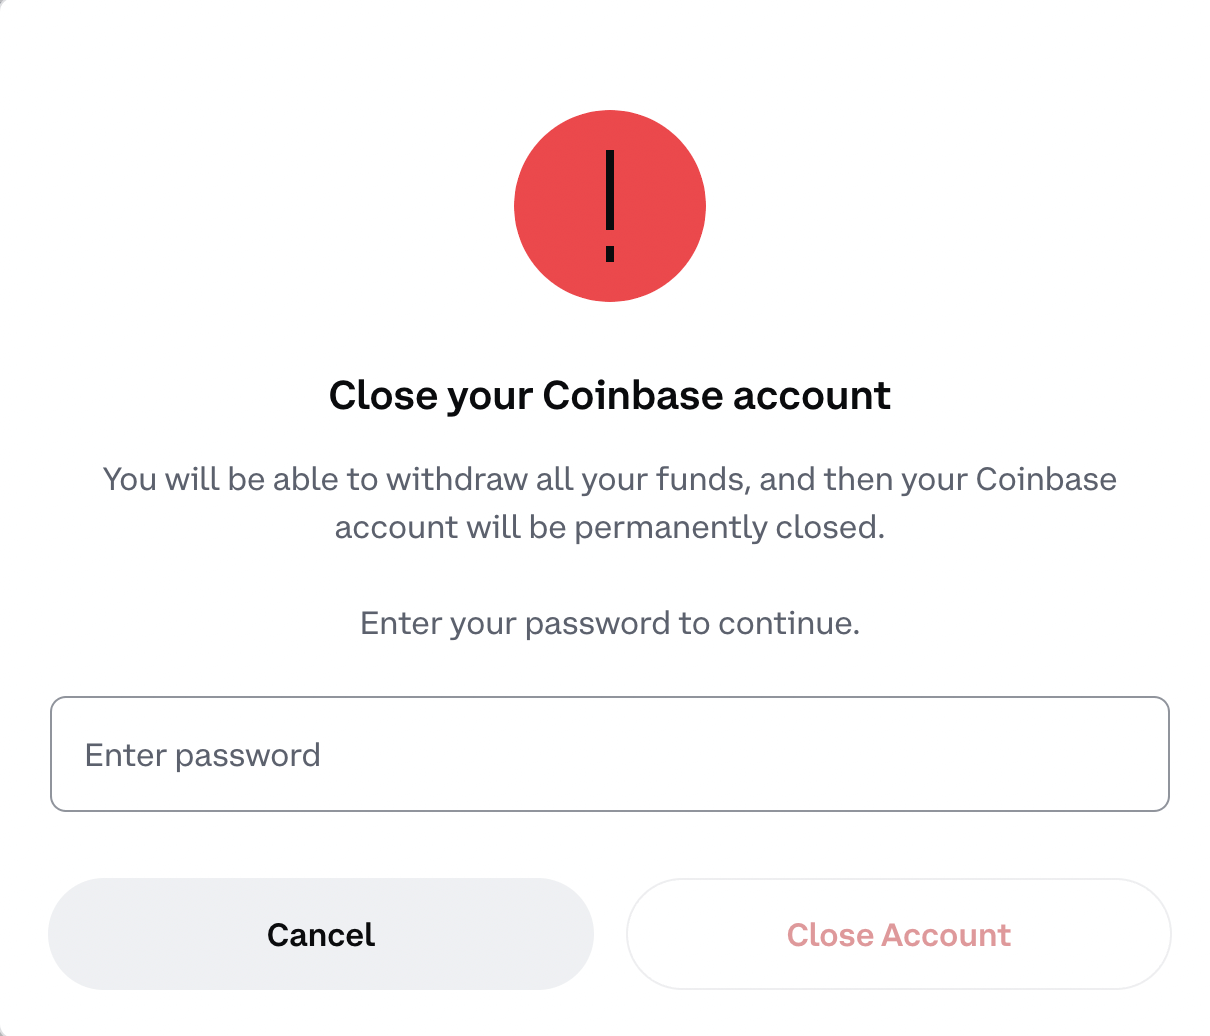 Close Your Coinbase Account